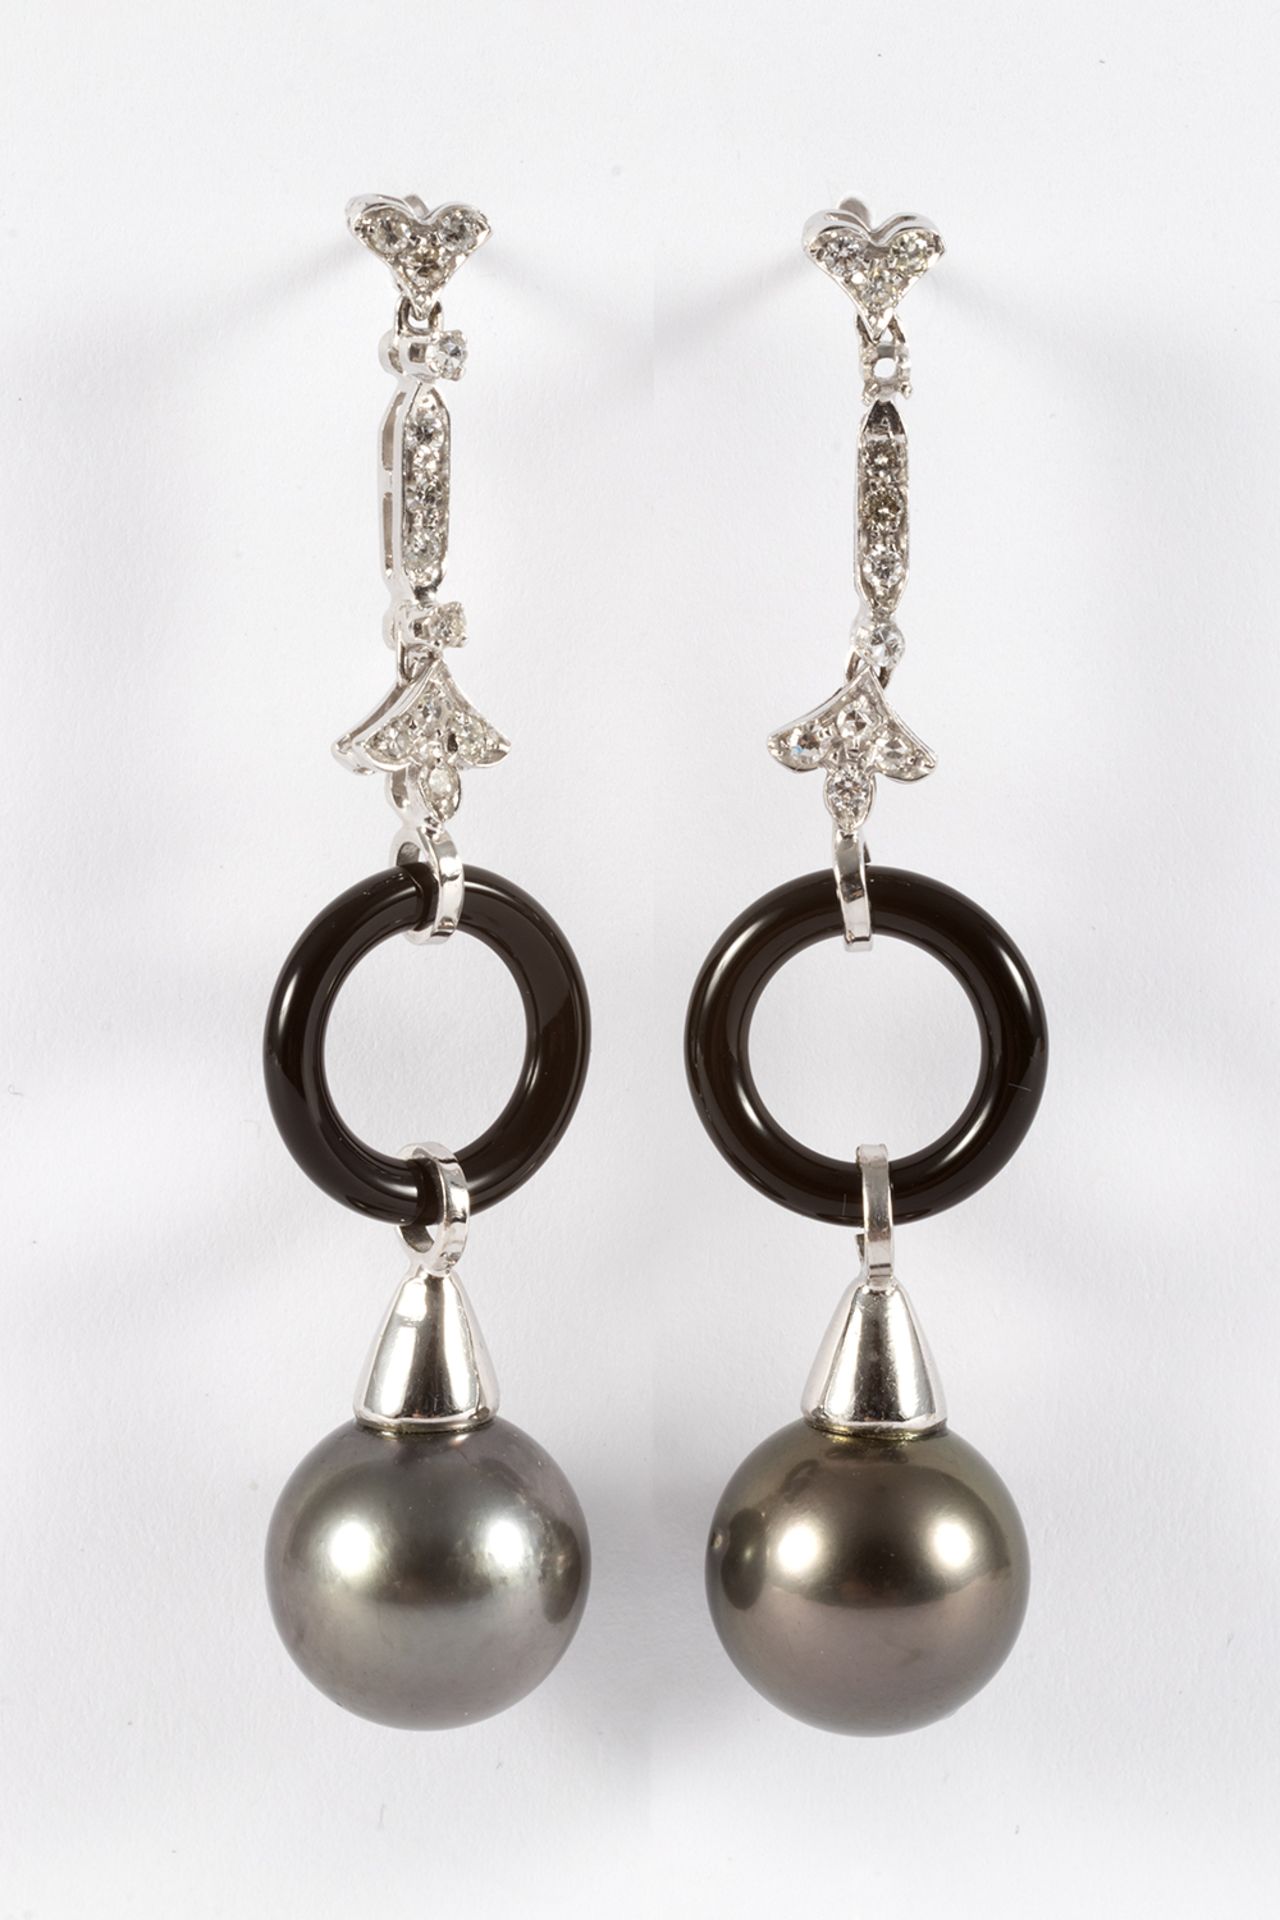 Long earrings in white gold, 8/8 cut diamonds, onyx and 12 mm Tahiti pearl.